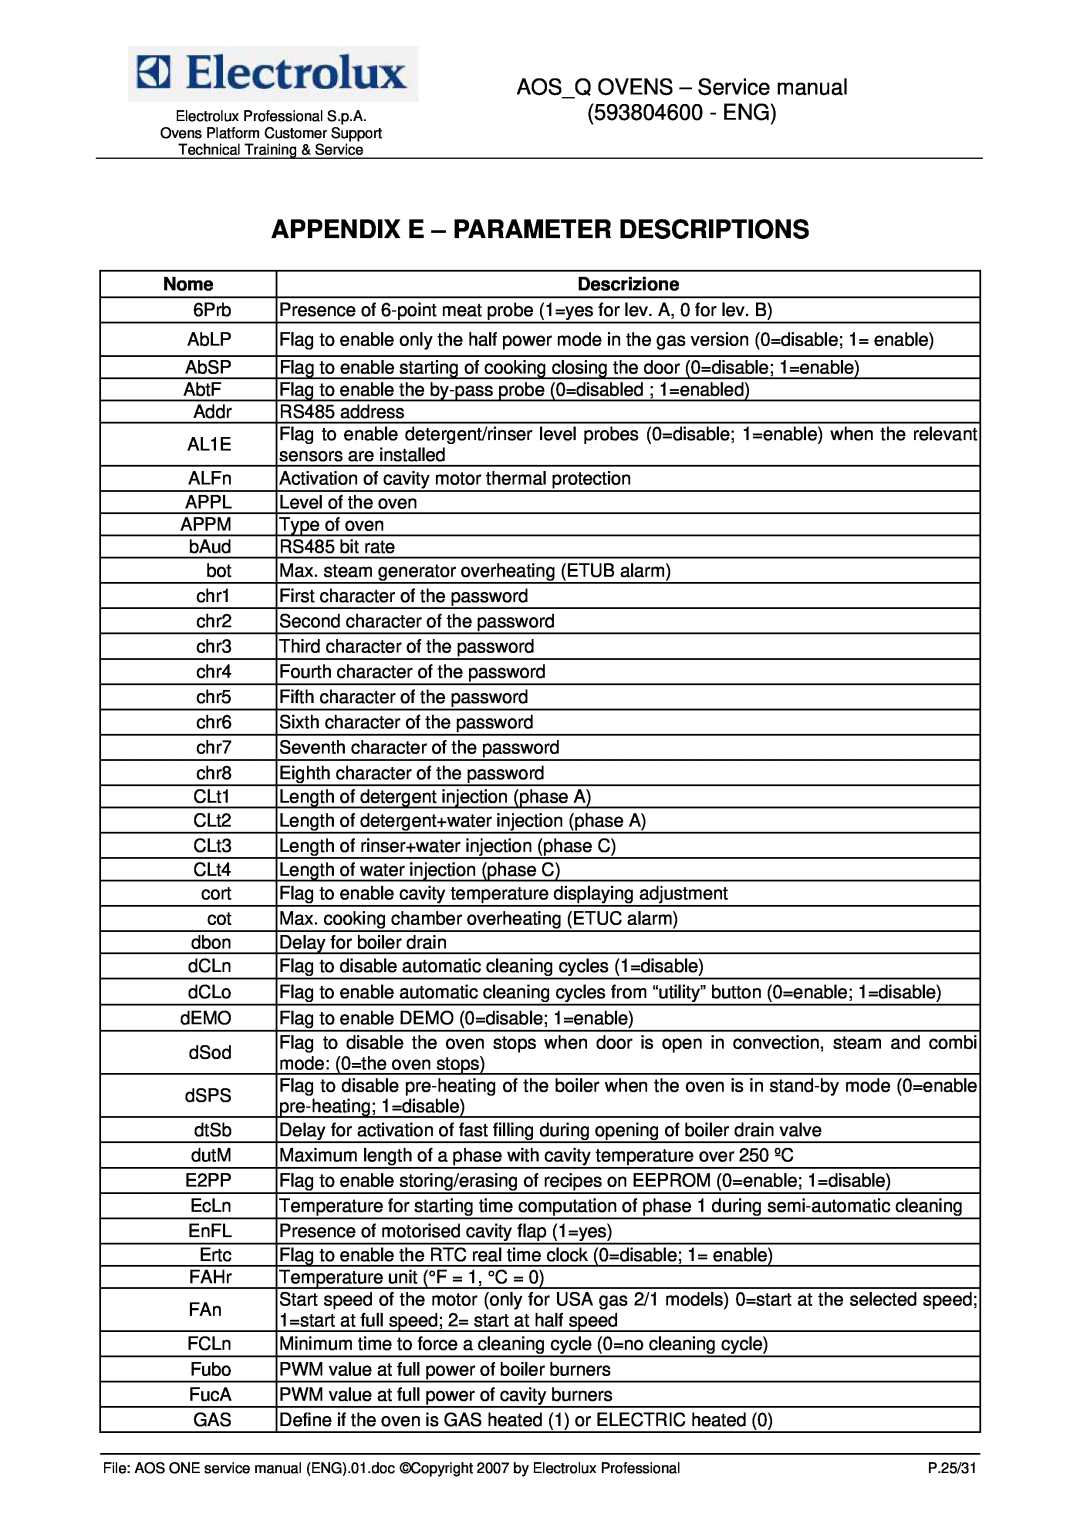 Electrolux Appendix E - Parameter Descriptions, AOSQ OVENS - Service manual 593804600 - ENG, Nome, Descrizione 